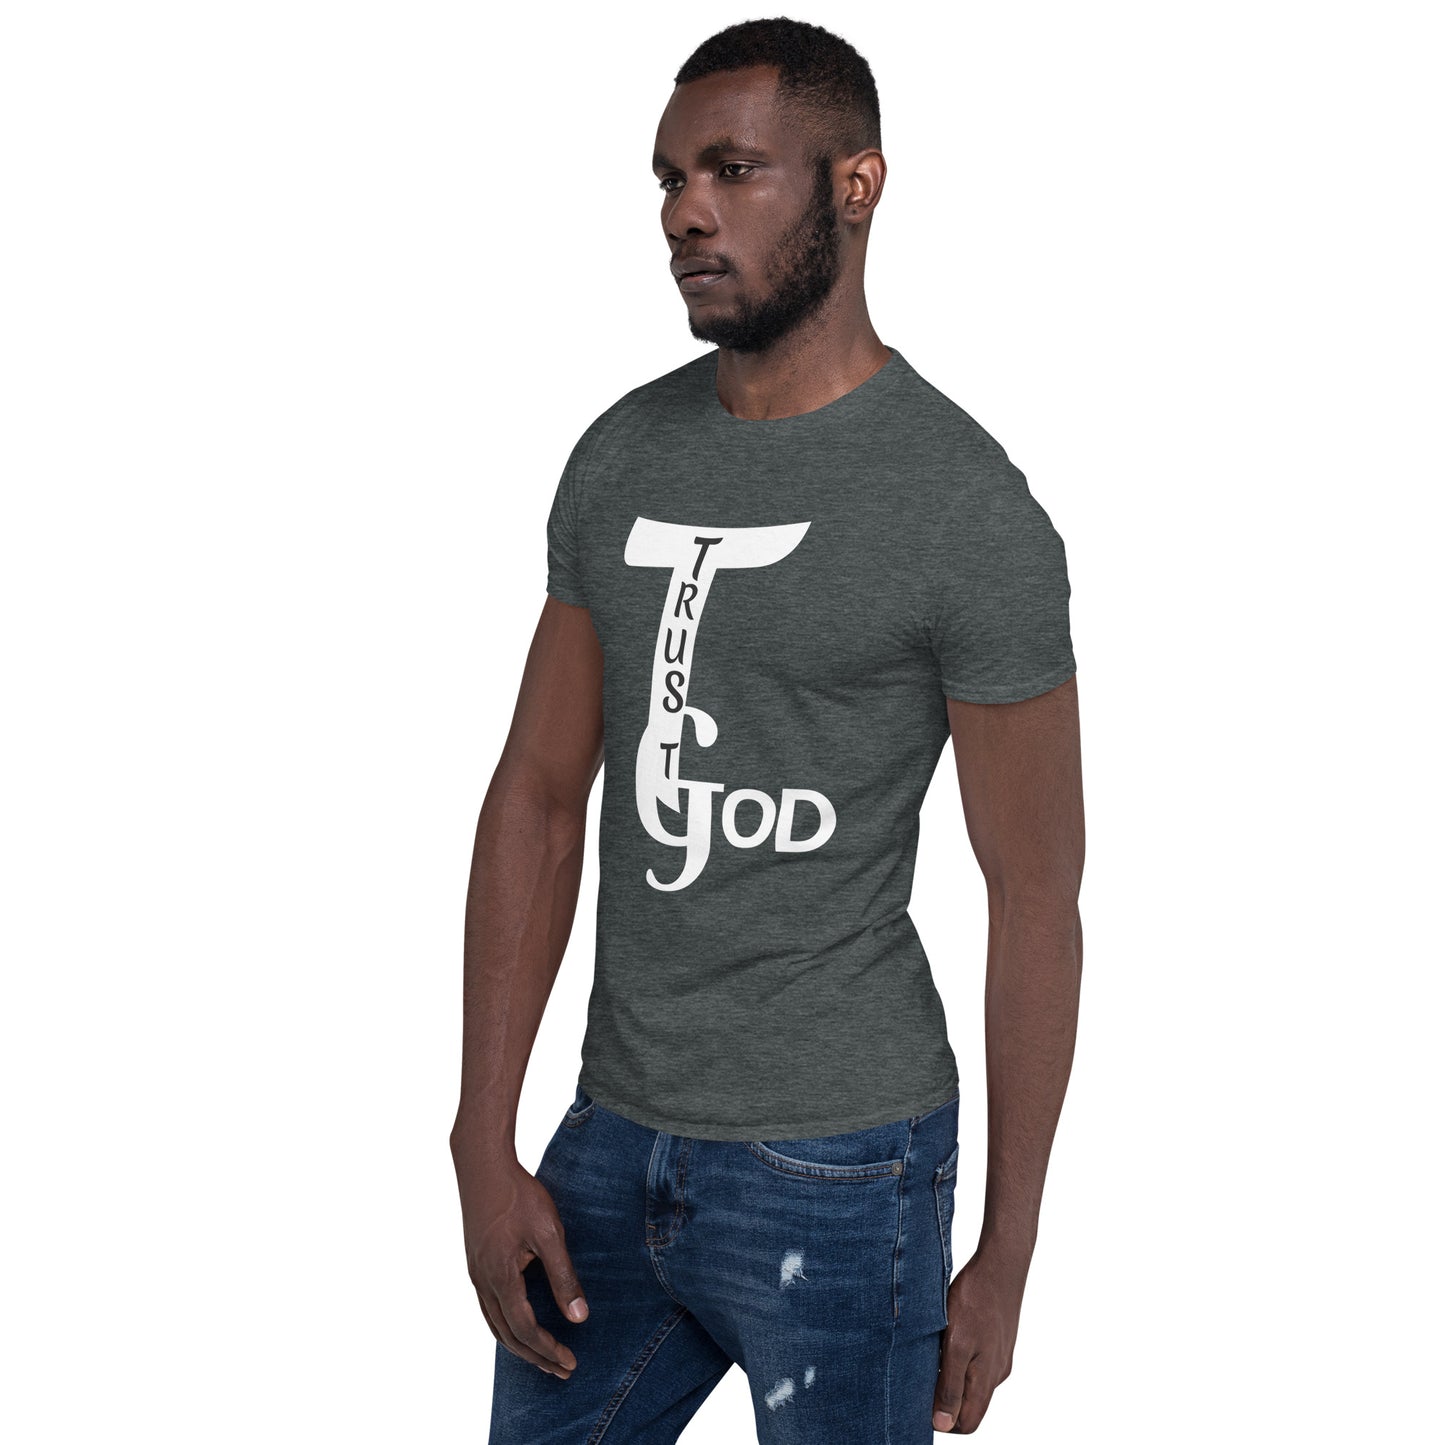 Trust God Short-Sleeve Unisex T-Shirt